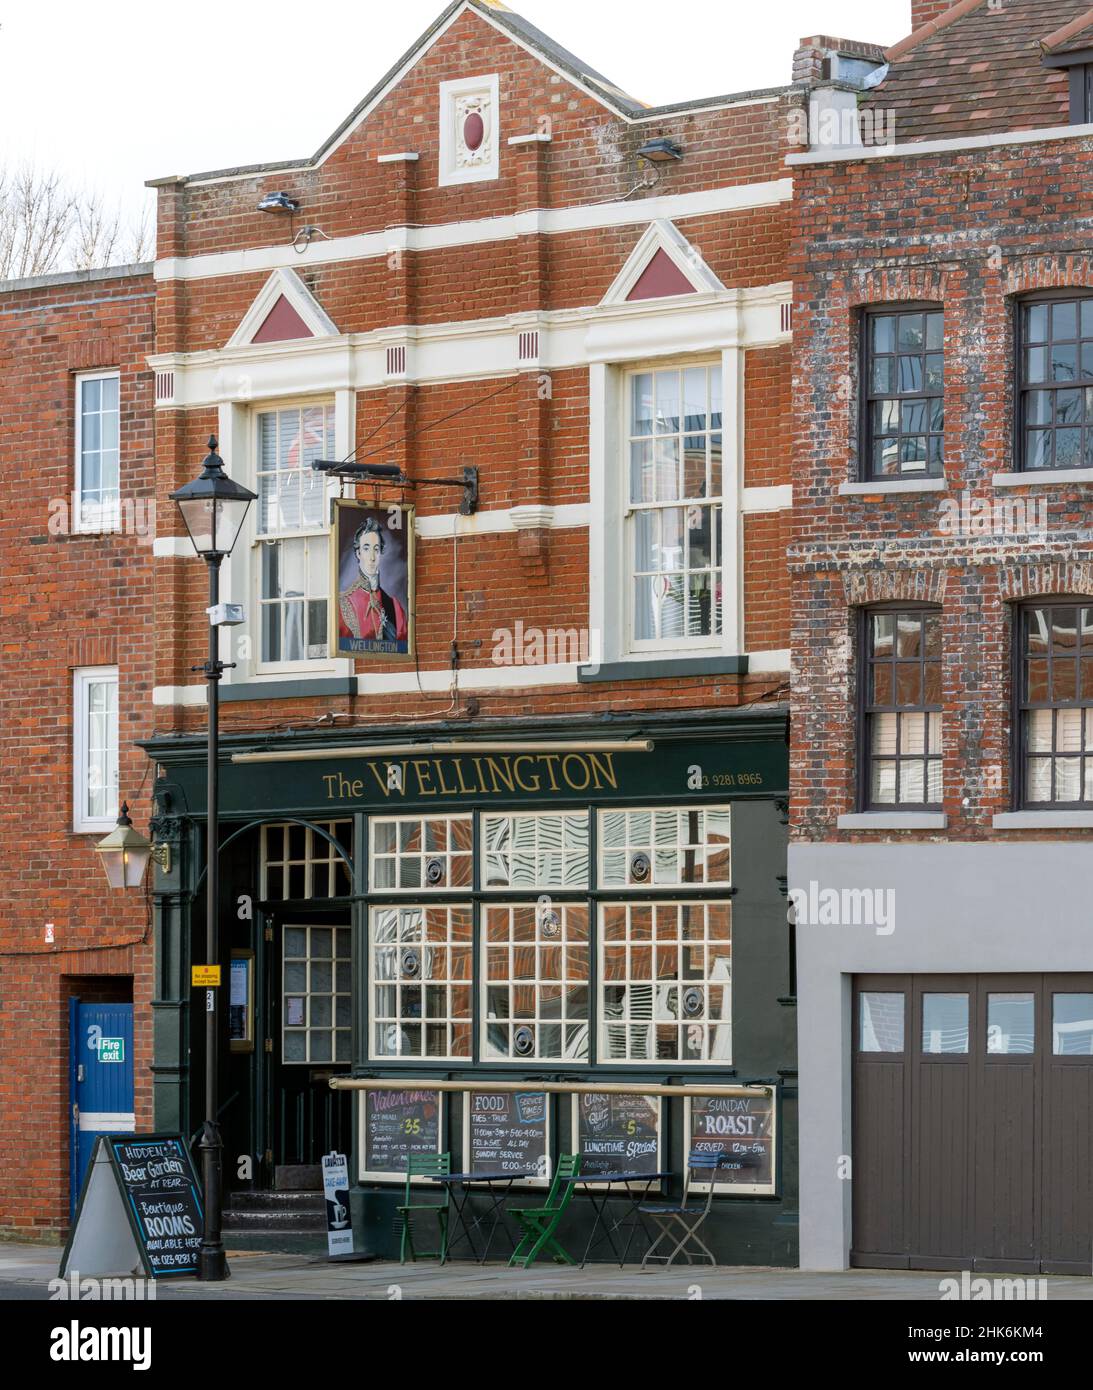 The Wellington - public house, restaurant and hotel - High Street, Old Portsmouth, Portsmouth, Hampshire, England, UK Stock Photo